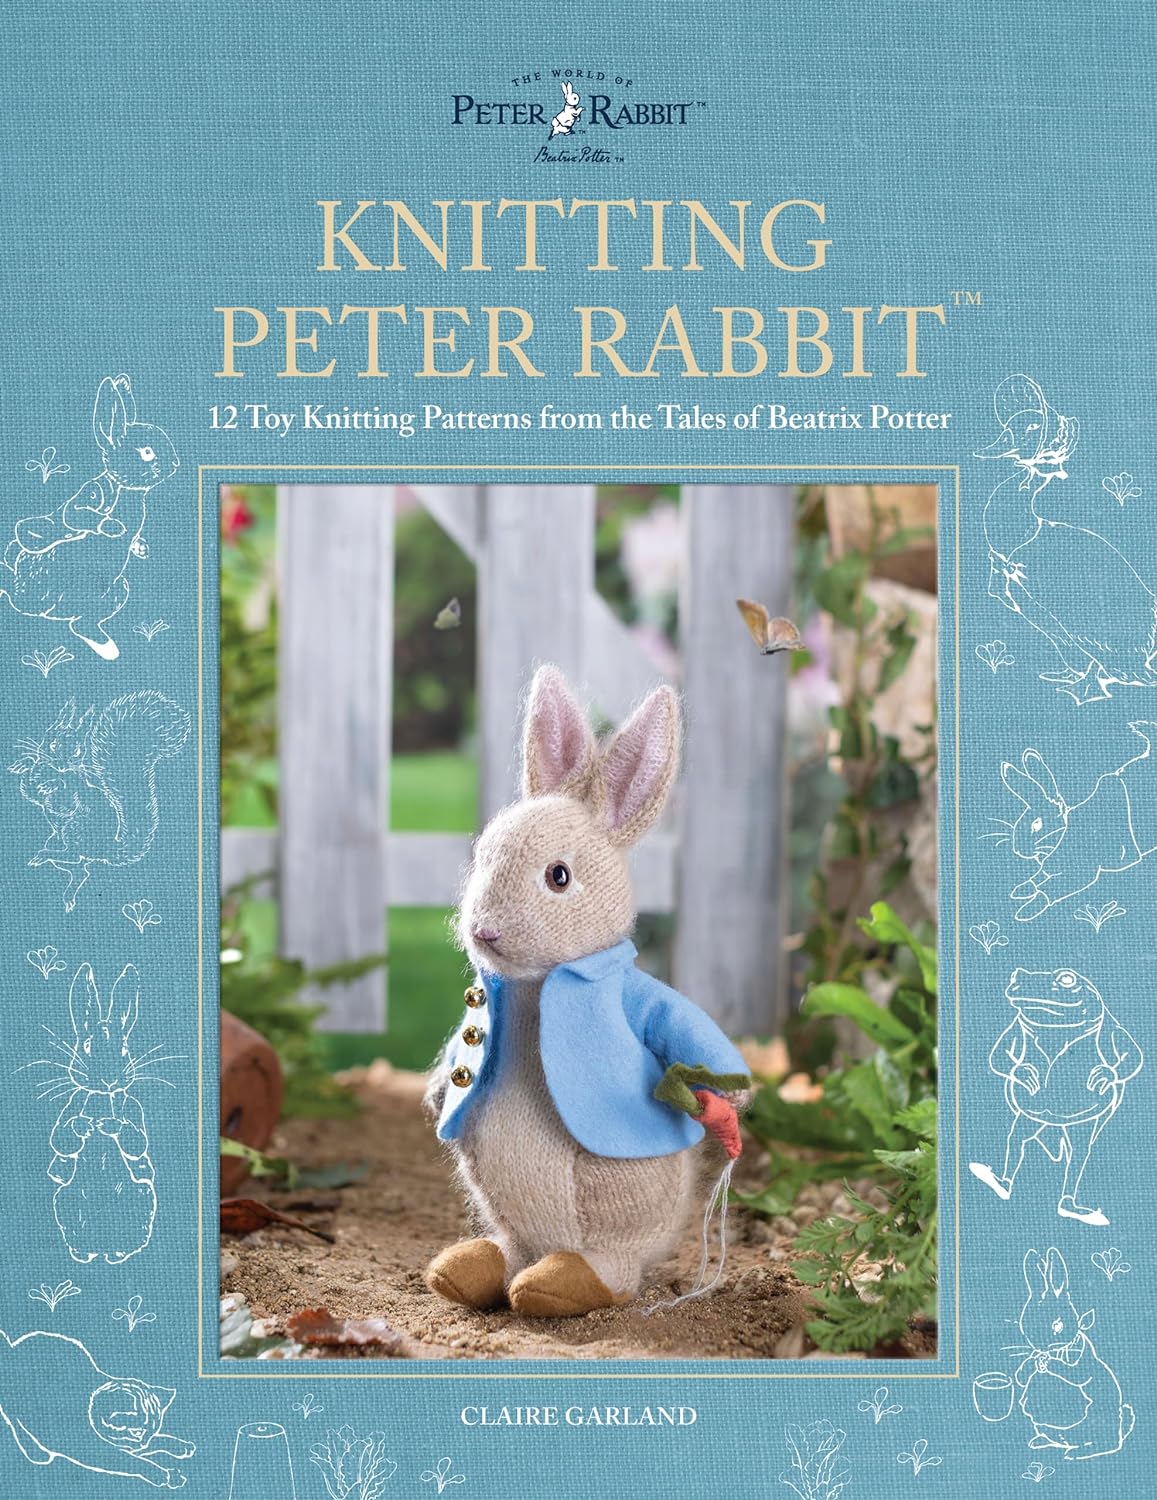 Claire Garland knitting peter rabbit de afstap amsterdam